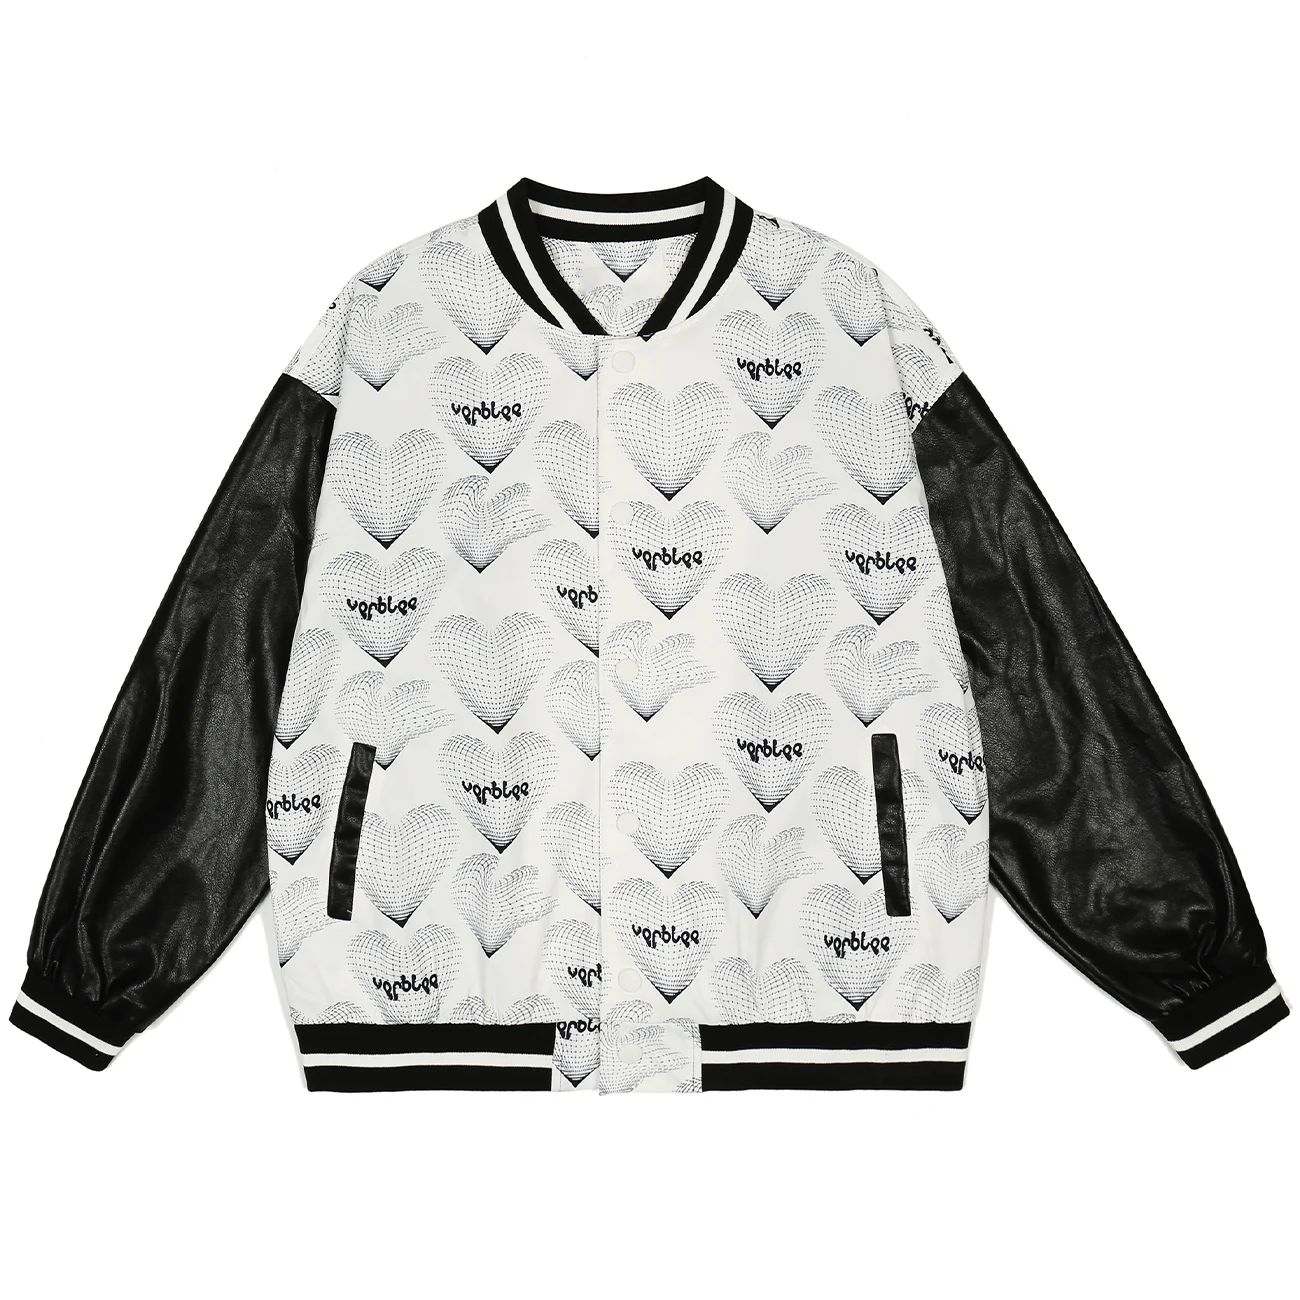 

LACIBLE Streetwear Men Baseball Jacket Coat Bomber Jacket Hip Hop Harajuku Grid Love Autumn Jacket Thin Loose Outwear Unisex